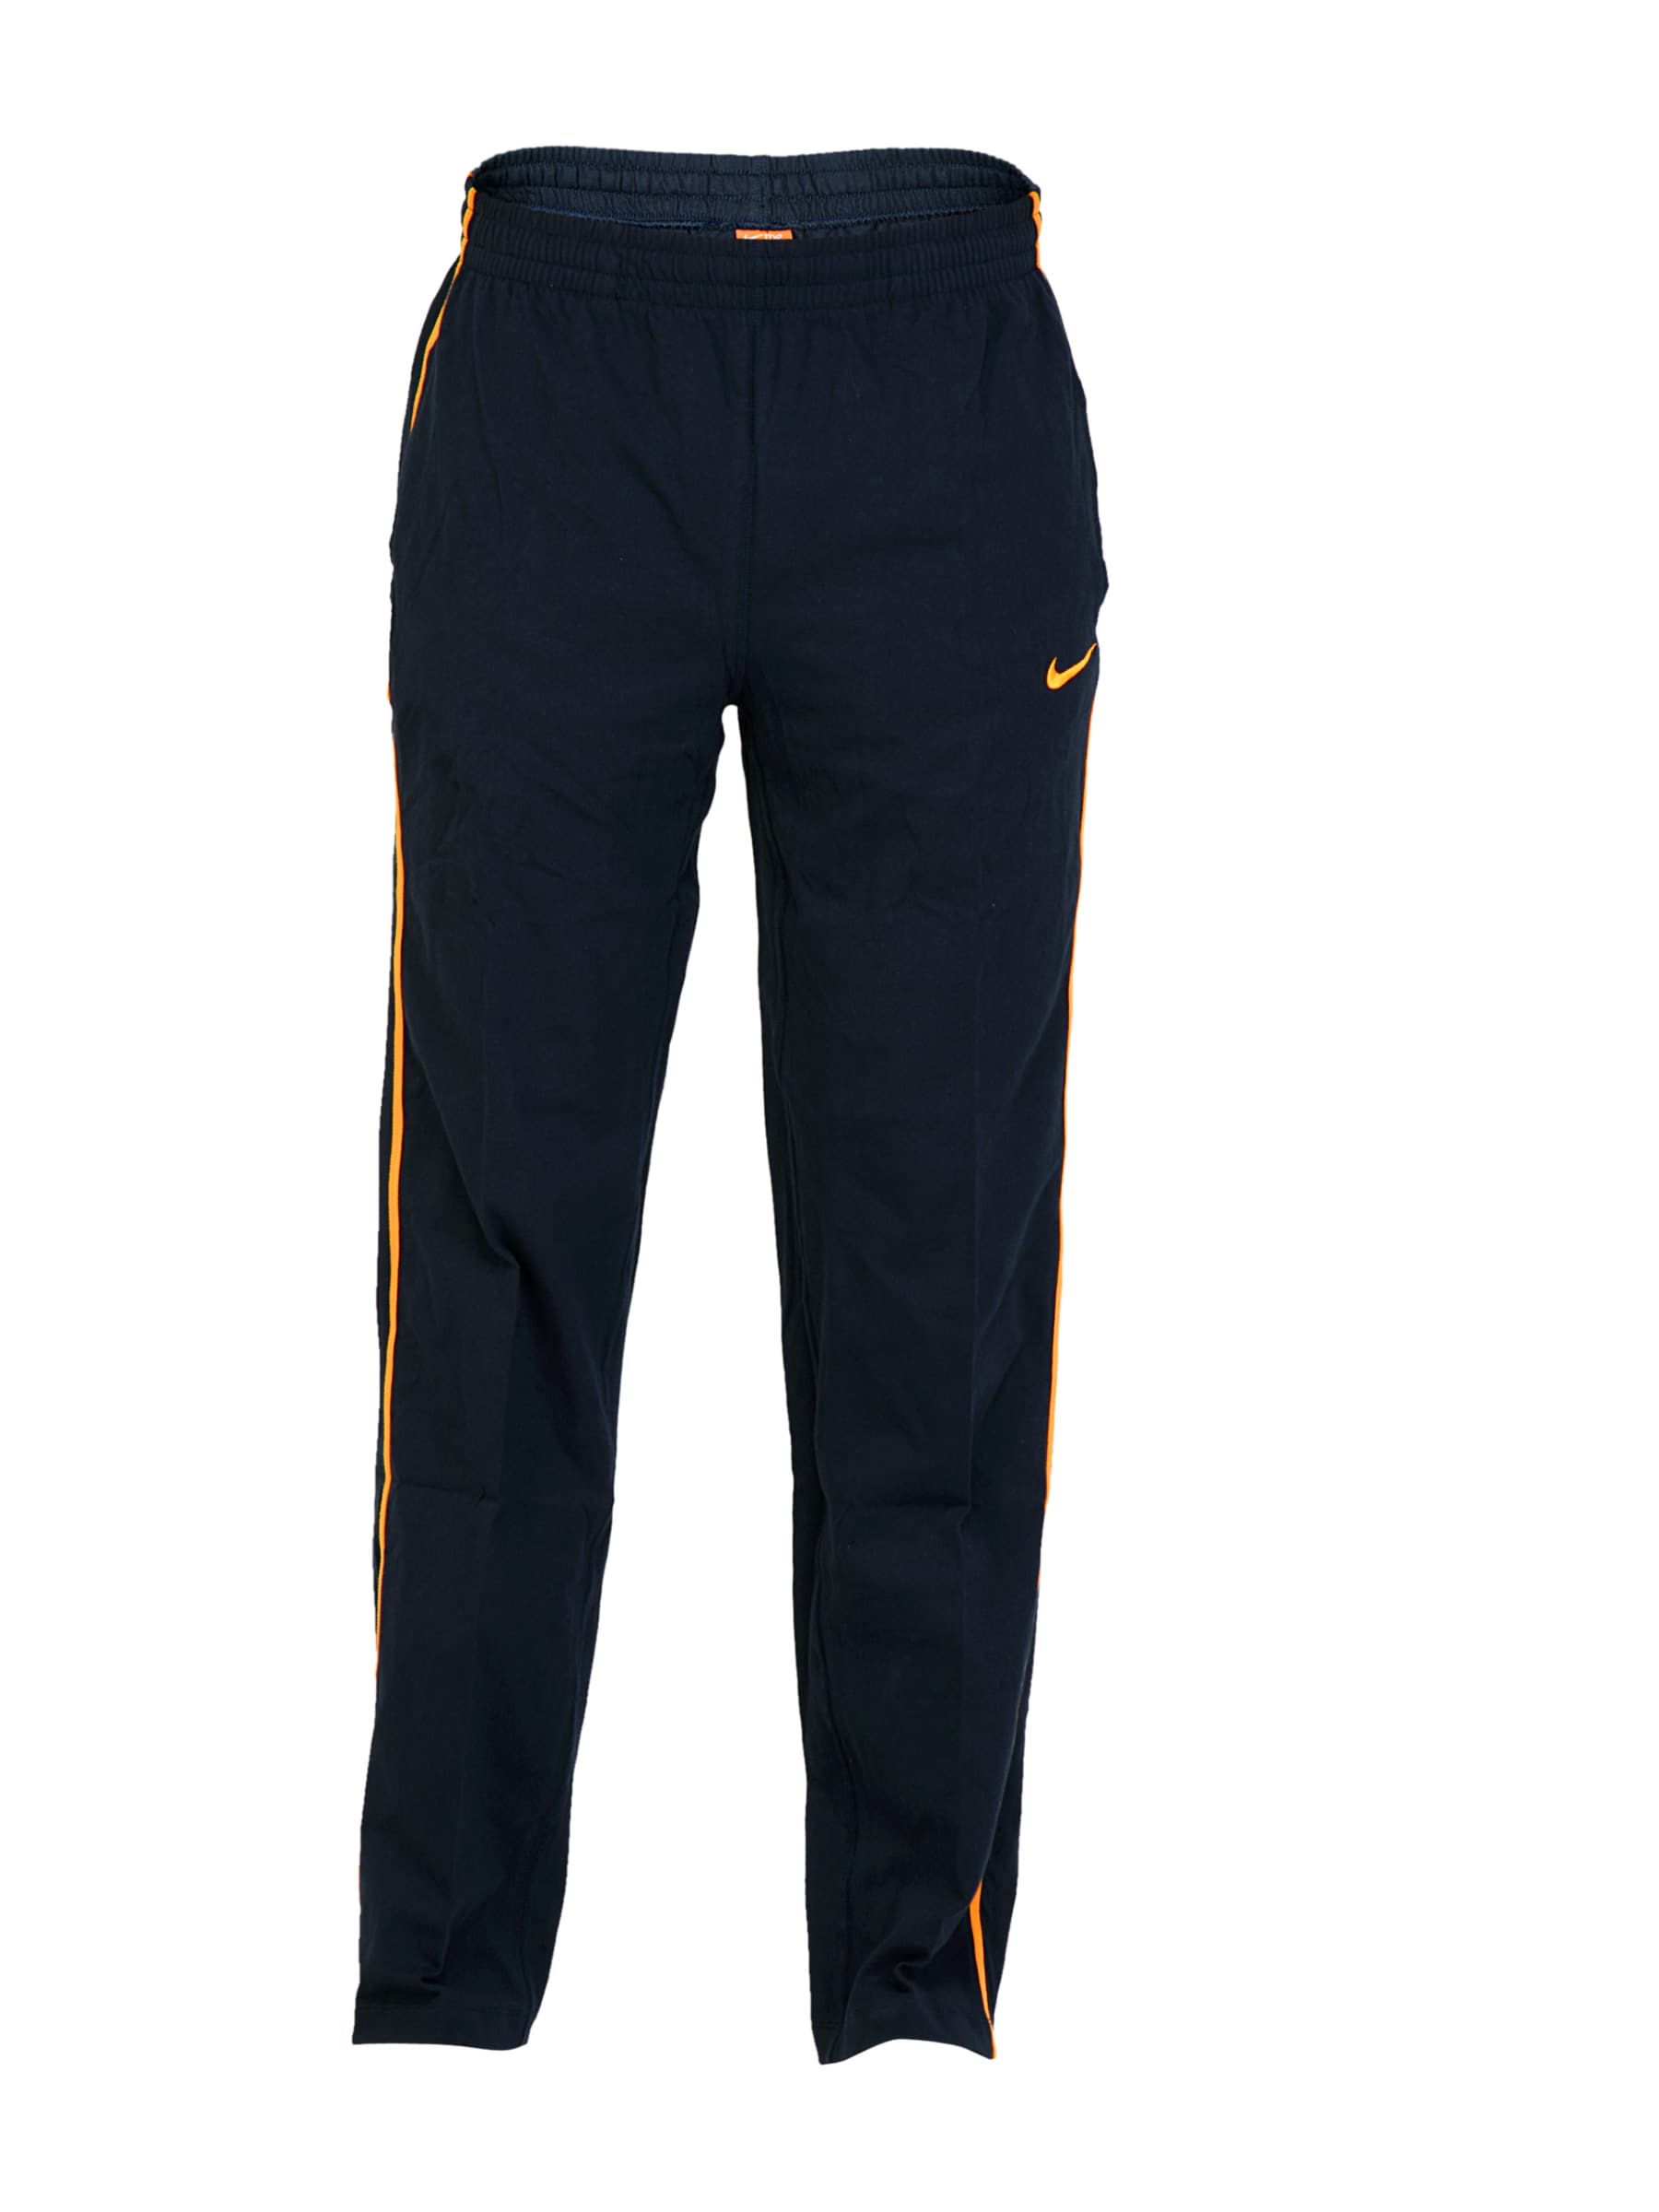 Nike Men Casual Navy Blue Track Pants